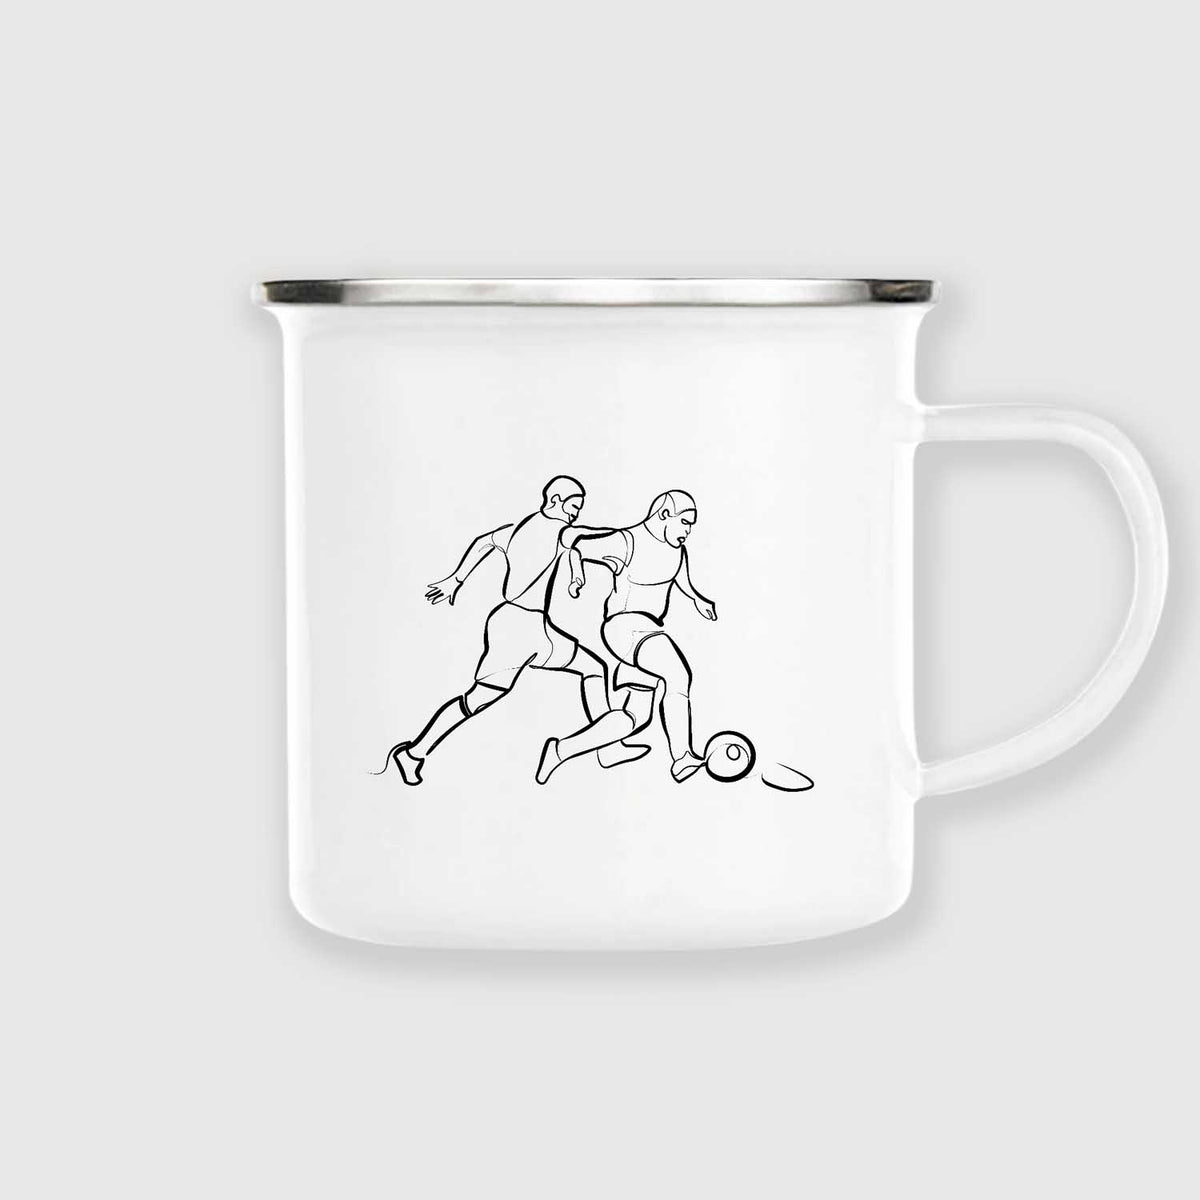 Footballers | Enamel mug